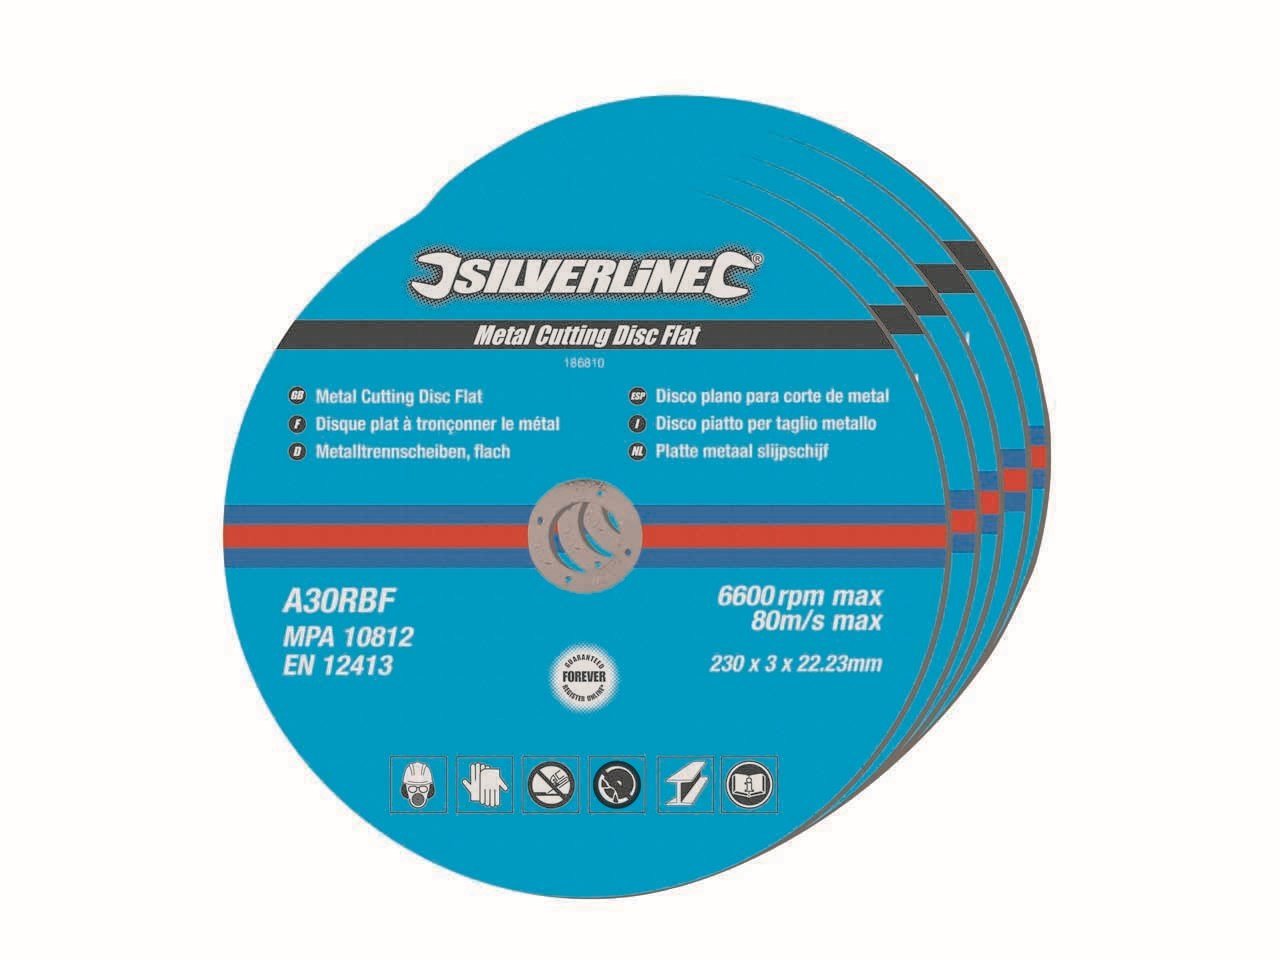 Silverline Metal Cutting Discs Flat, 230 x 3 x 22.2 mm - Pack of 5